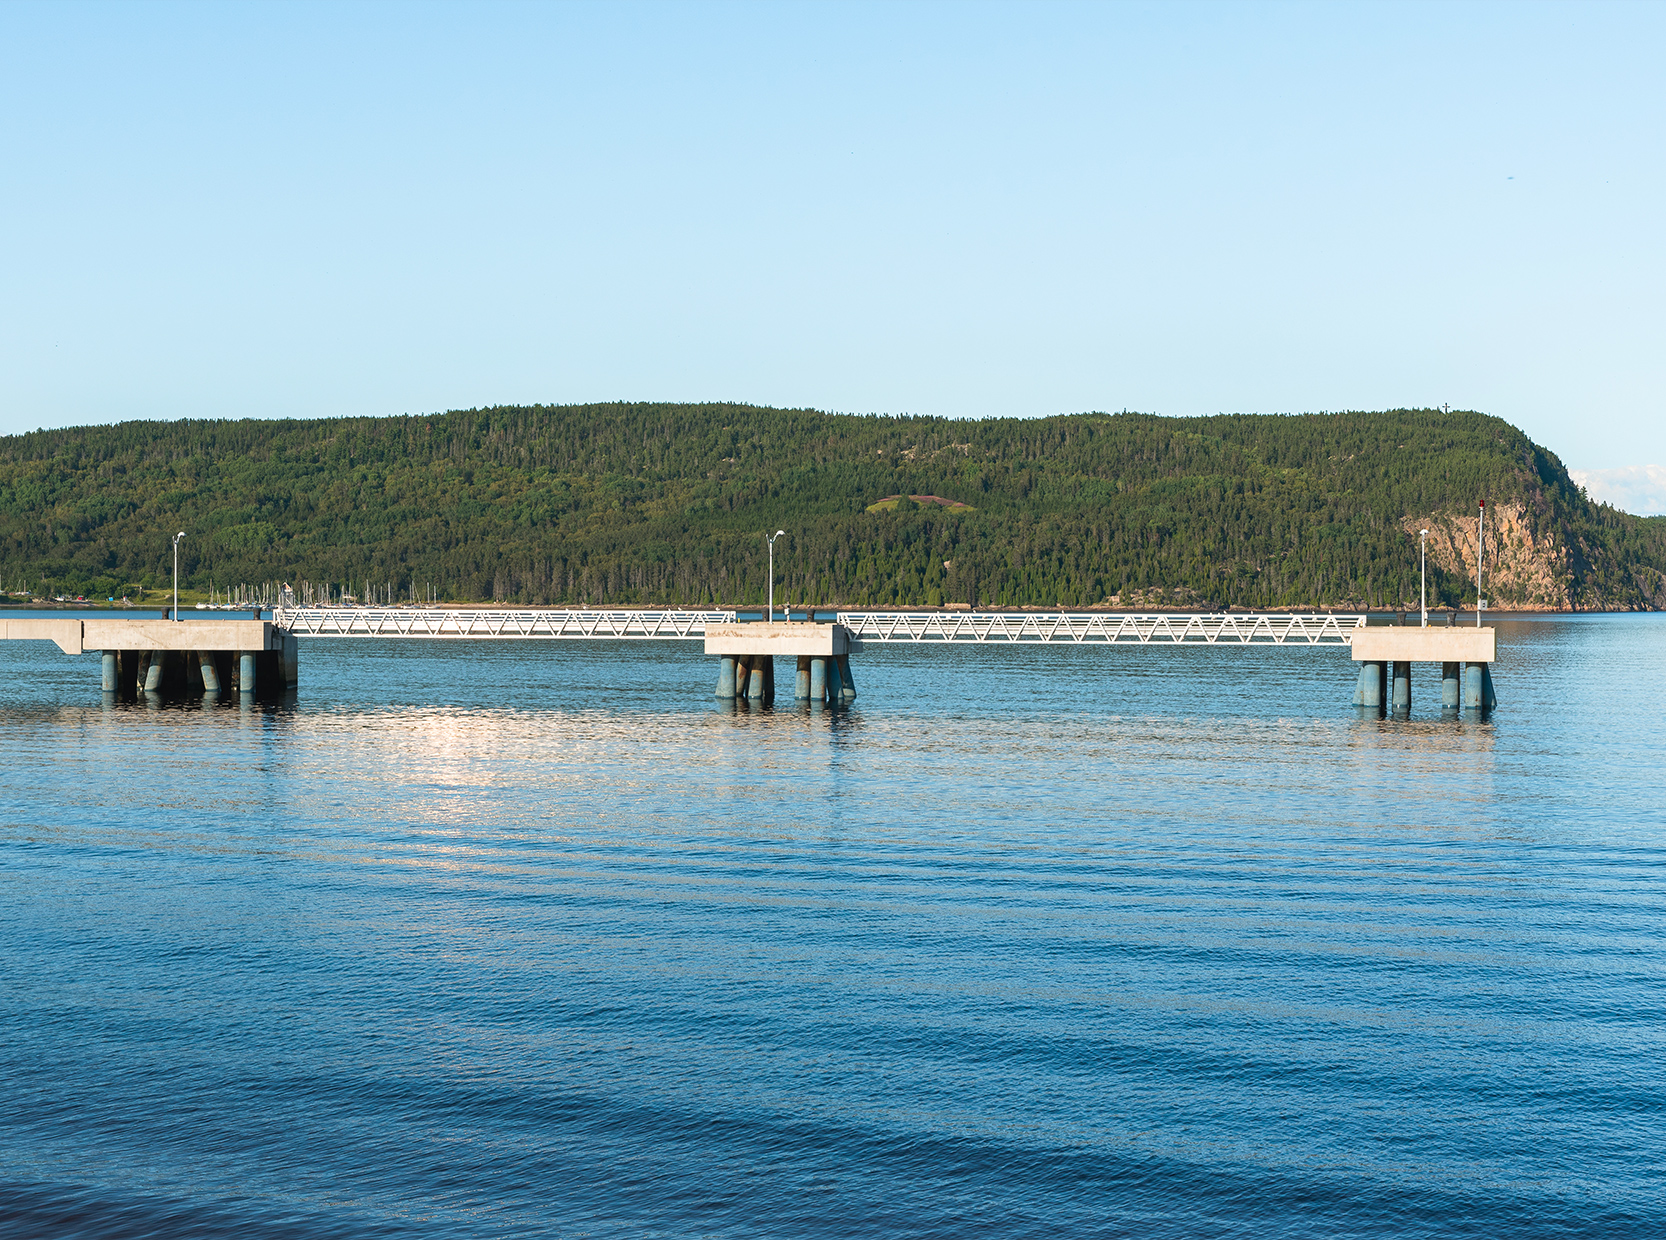 Turnkey aluminum ferry landing in Canada